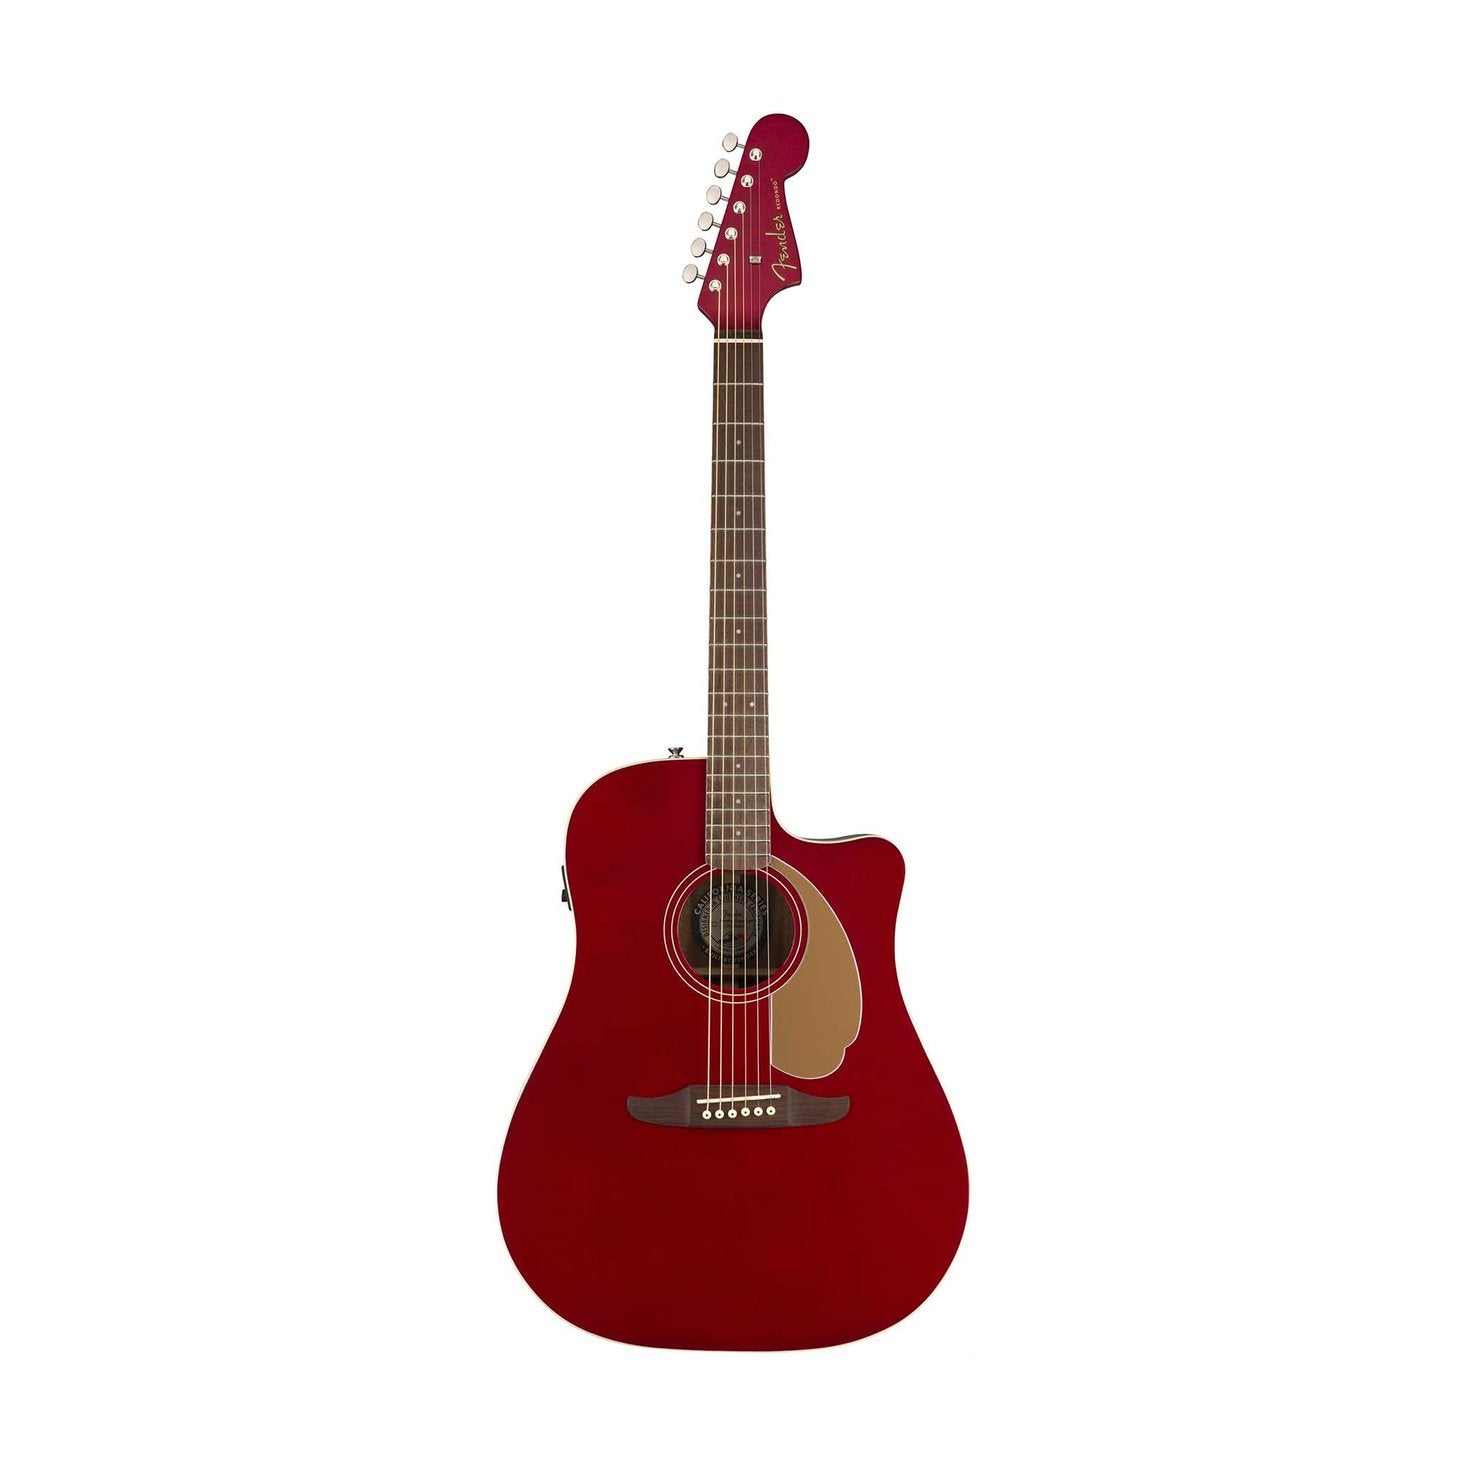 Fender Redondo Player Slope-Shouldered Acoustic Guitar, Candy Apple Red, FENDER, ACOUSTIC GUITAR, fender-acoustic-guitar-f03-097-0713-509, ZOSO MUSIC SDN BHD